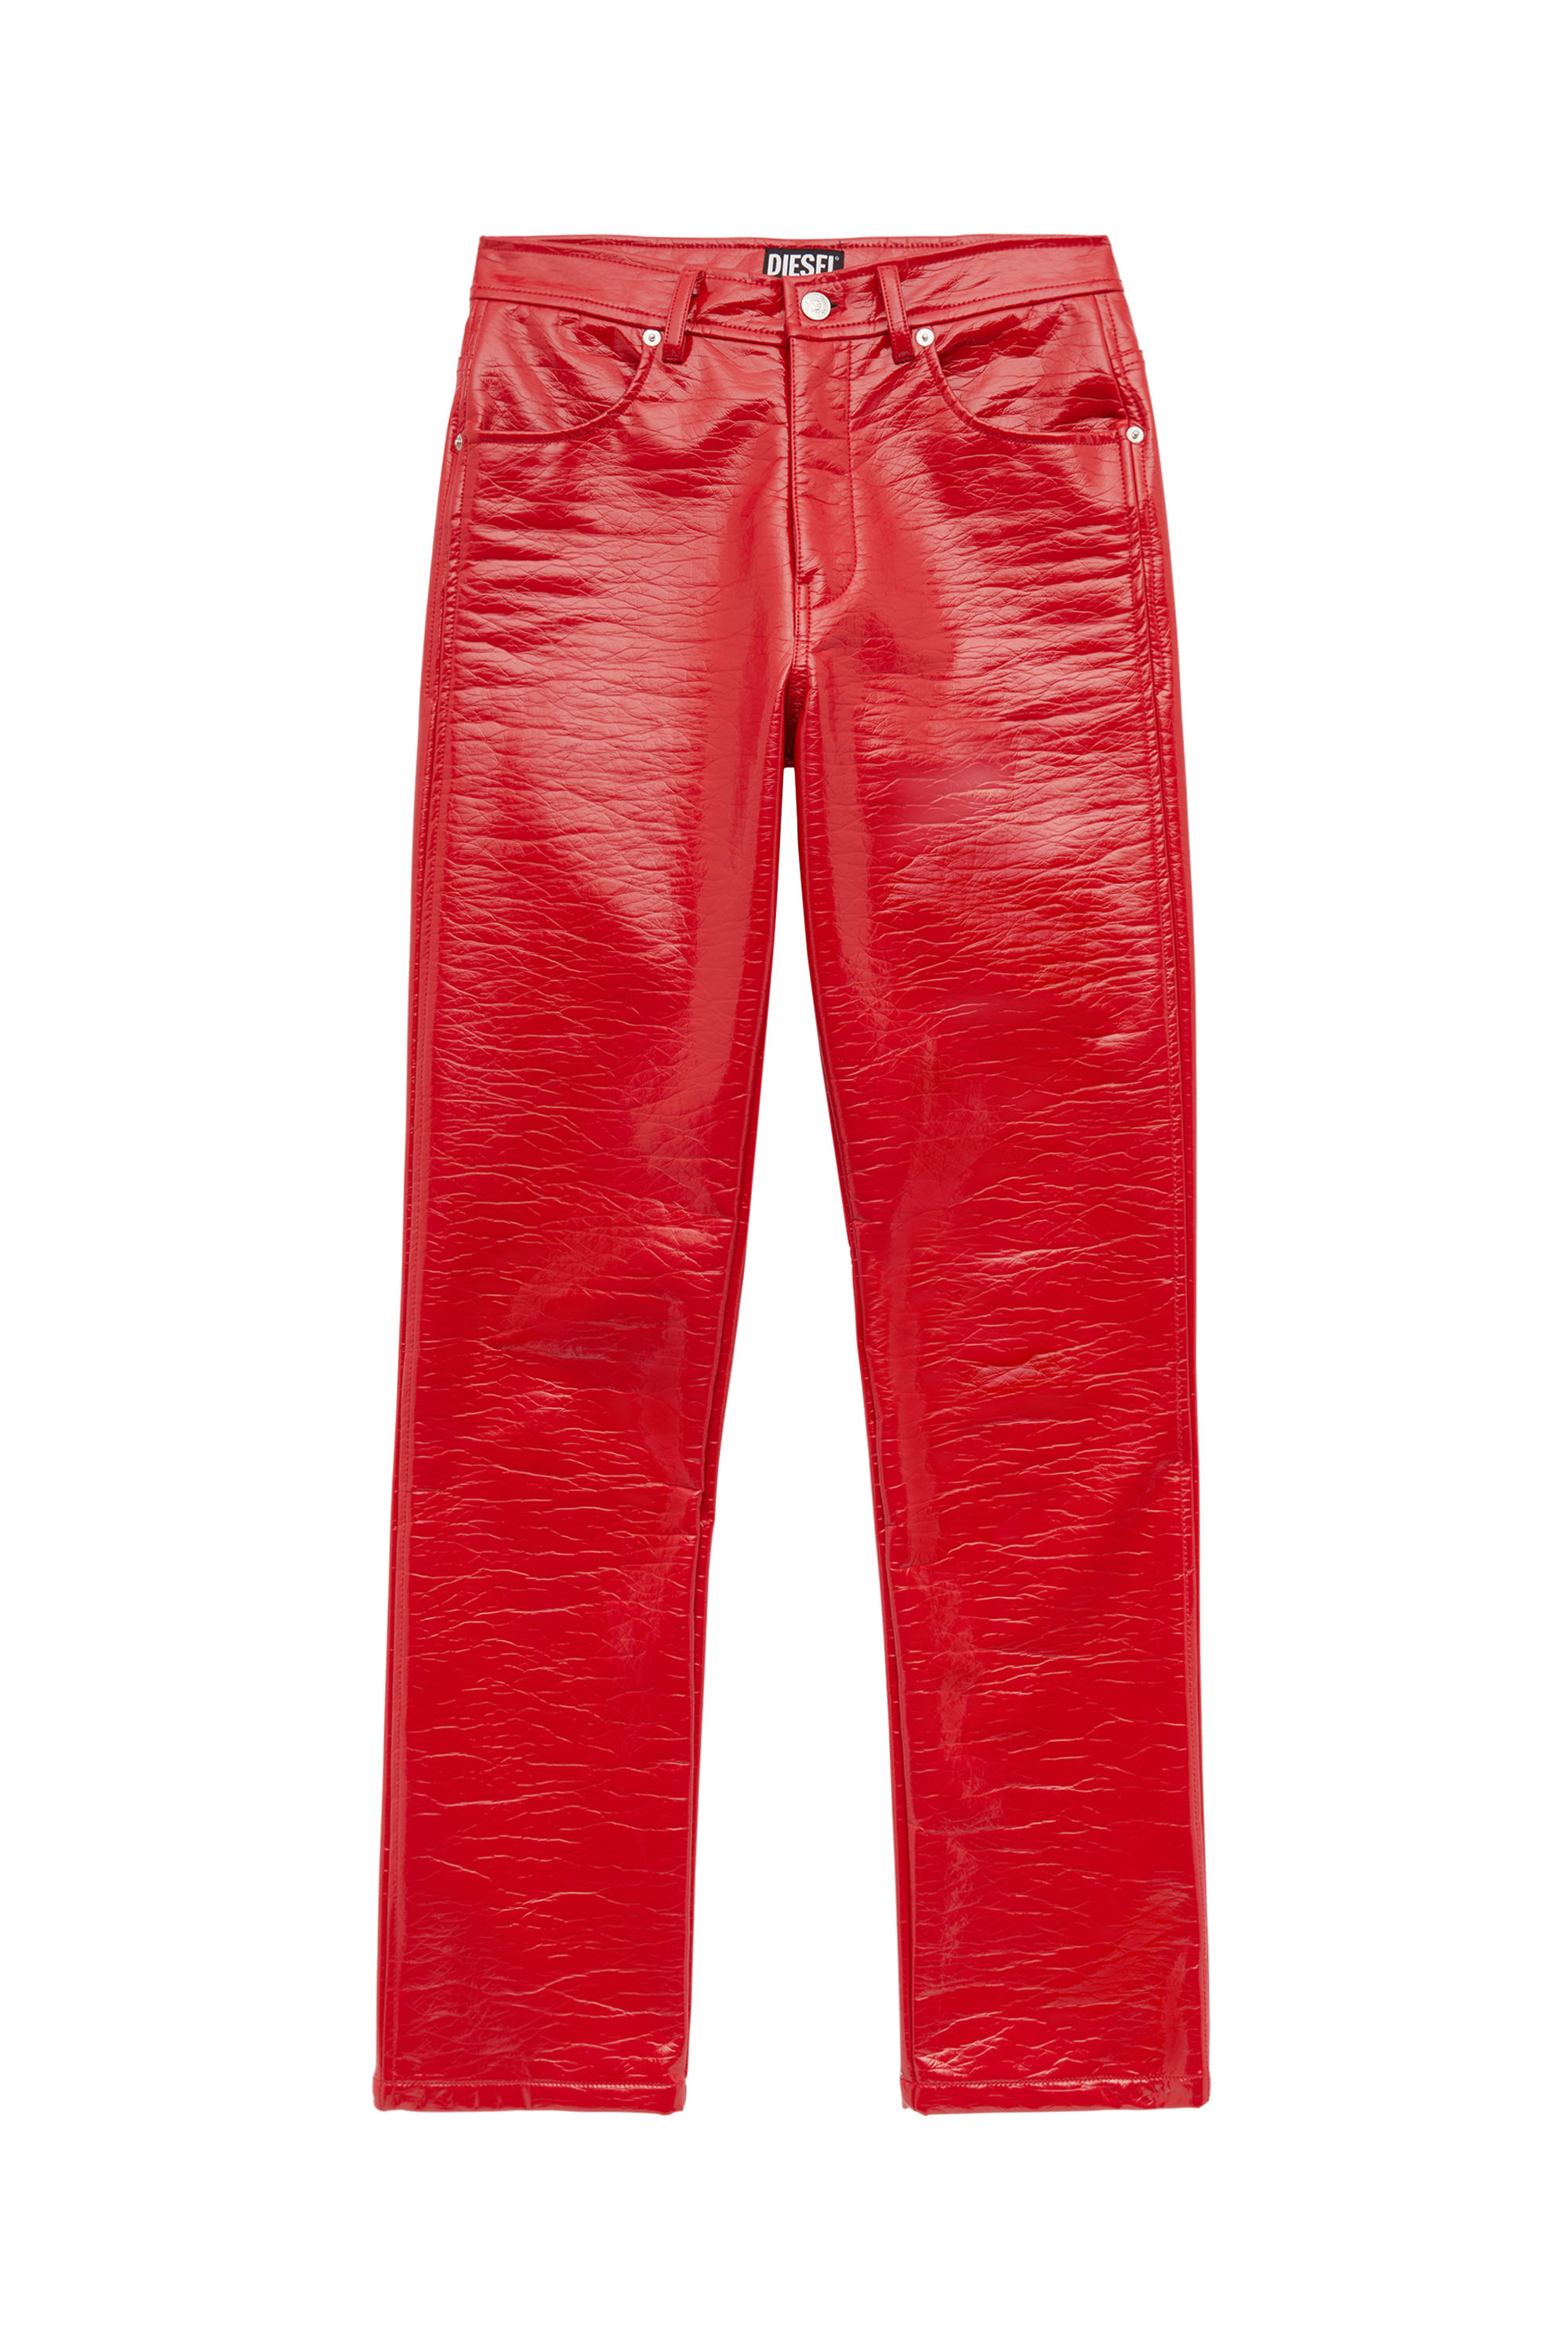 vente galning Sindssyge Diesel Women Jeans and Apparel: New Collection | Diesel®